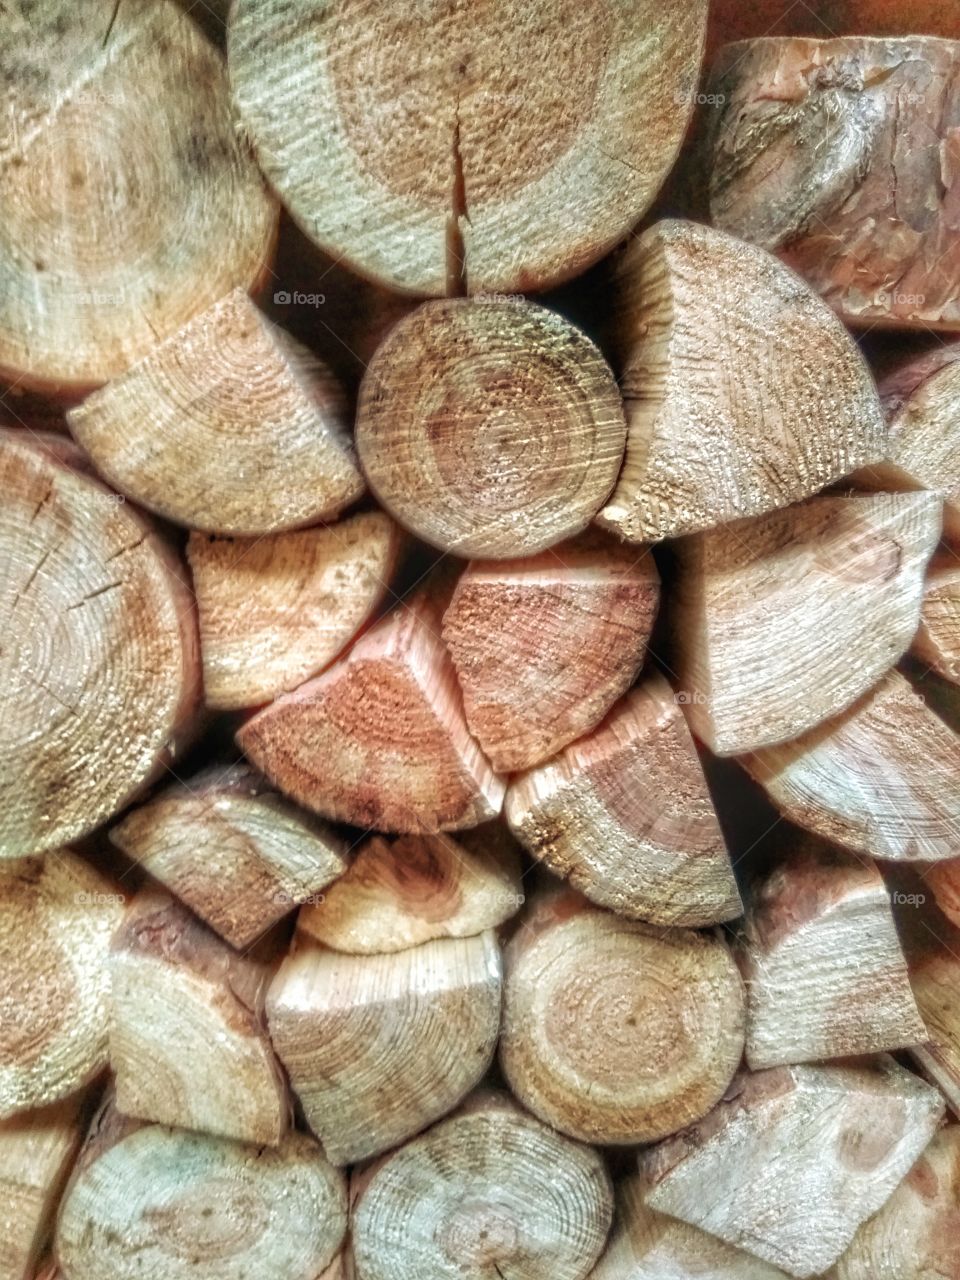 Firewood 2